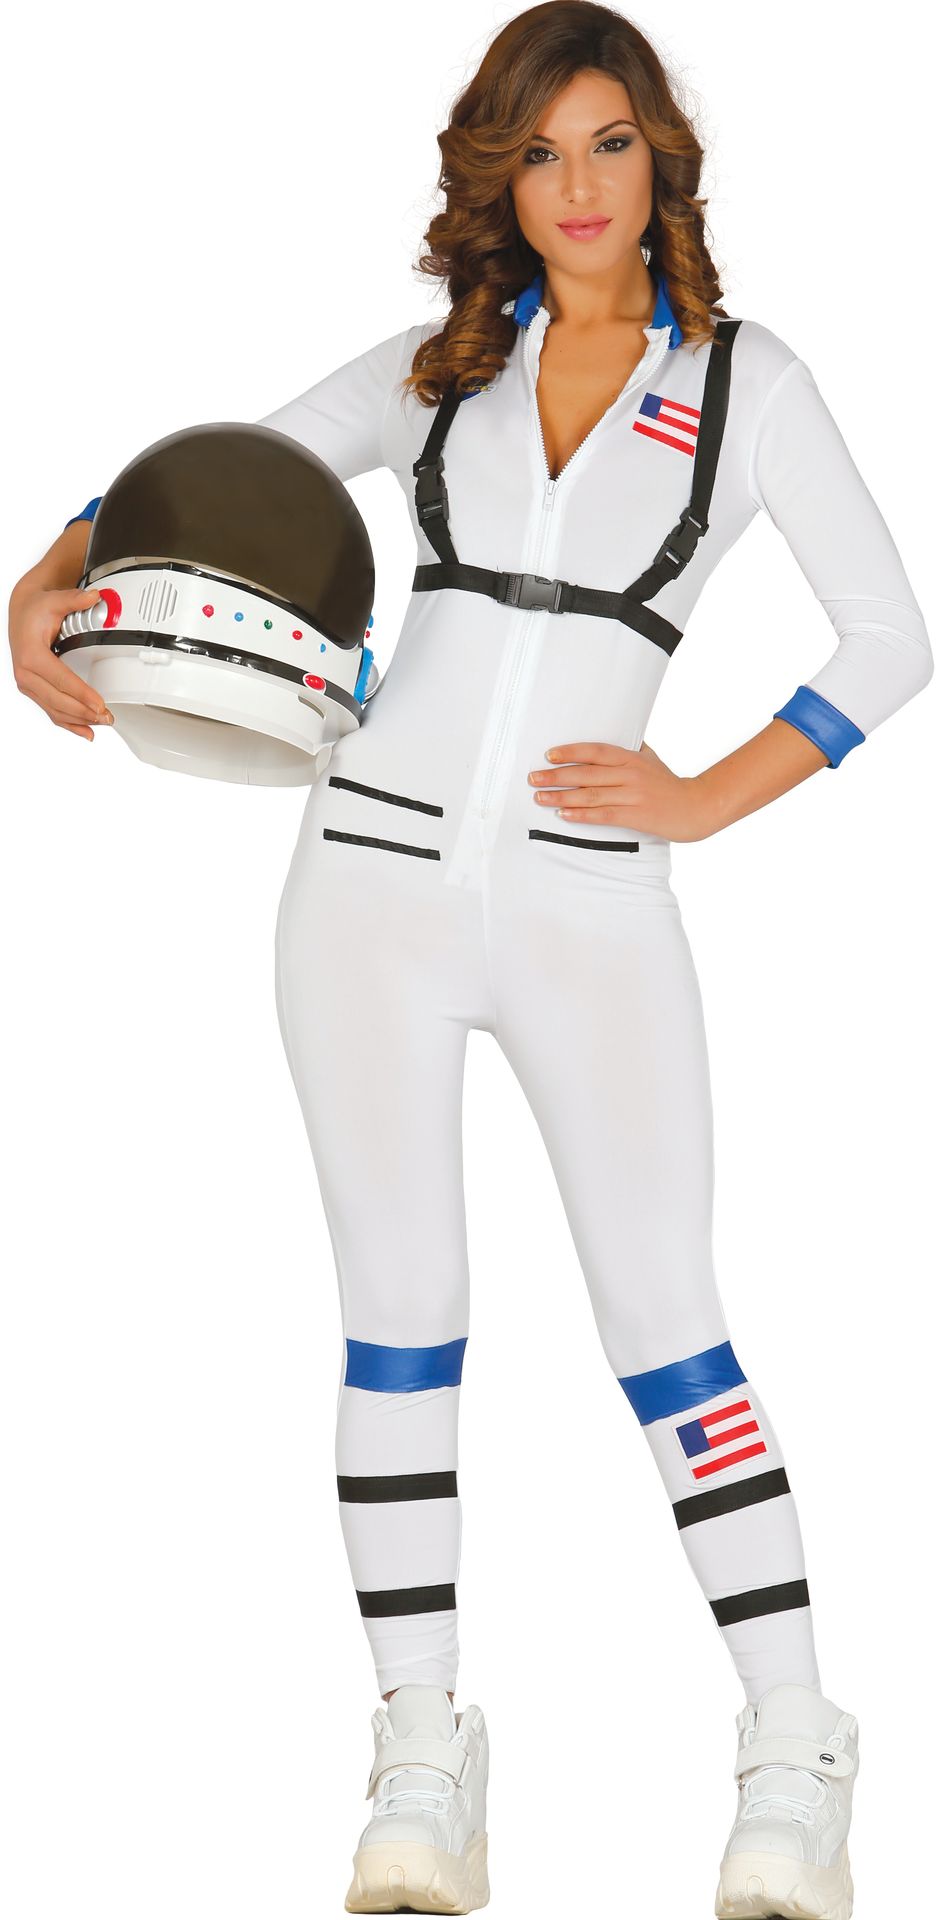 NASA jumpsuit